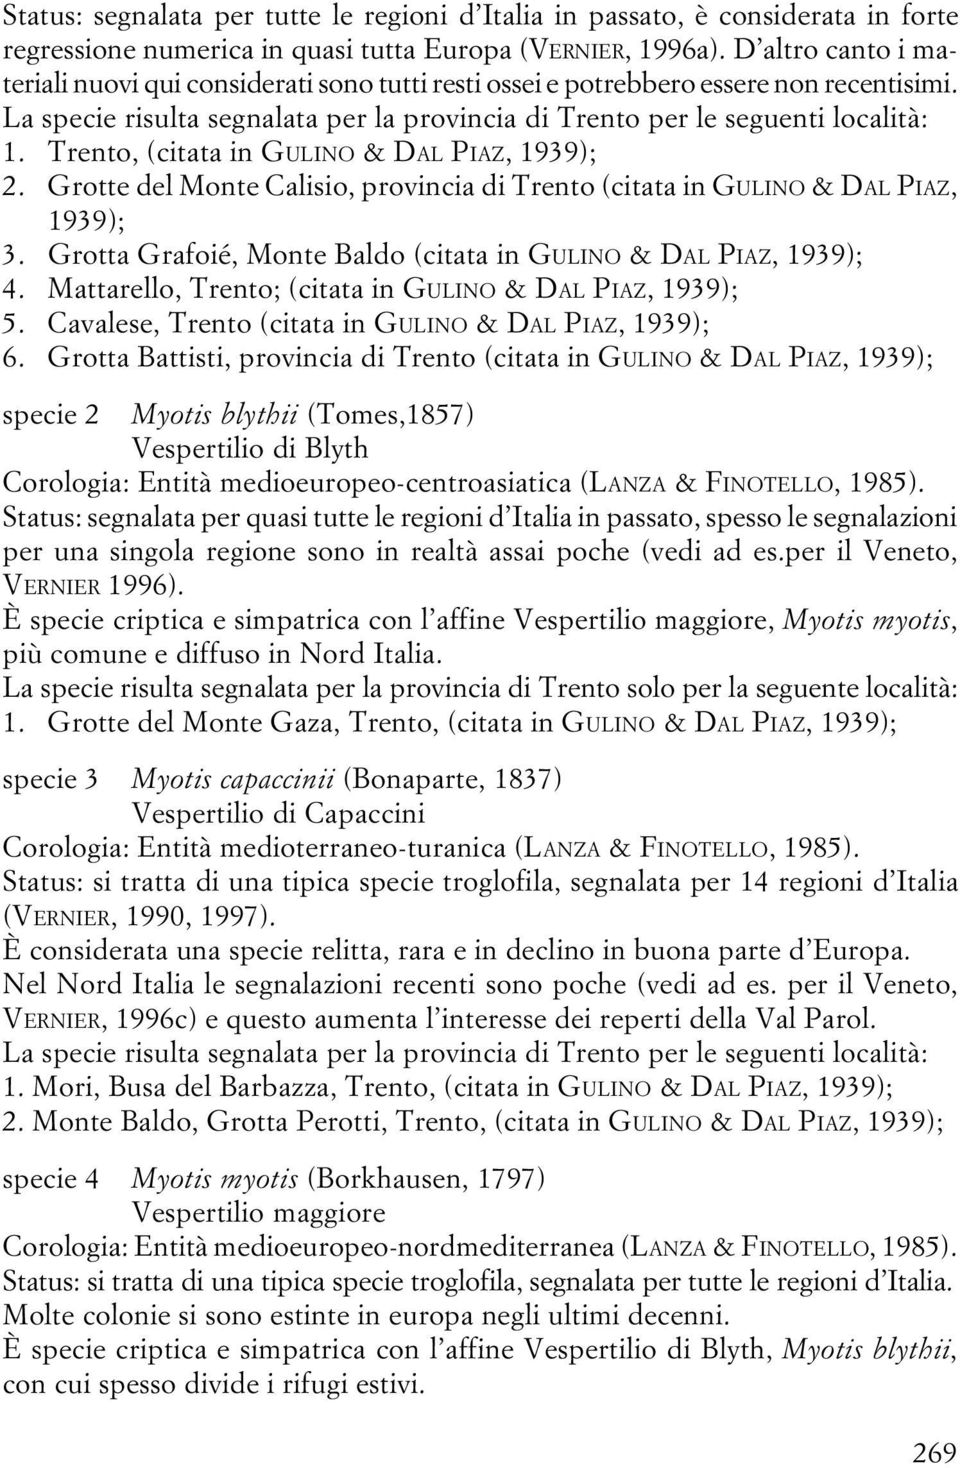 Trento, (citata in GULINO & DAL PIAZ, 1939); 2. Grotte del Monte Calisio, provincia di Trento (citata in GULINO & DAL PIAZ, 1939); 3.